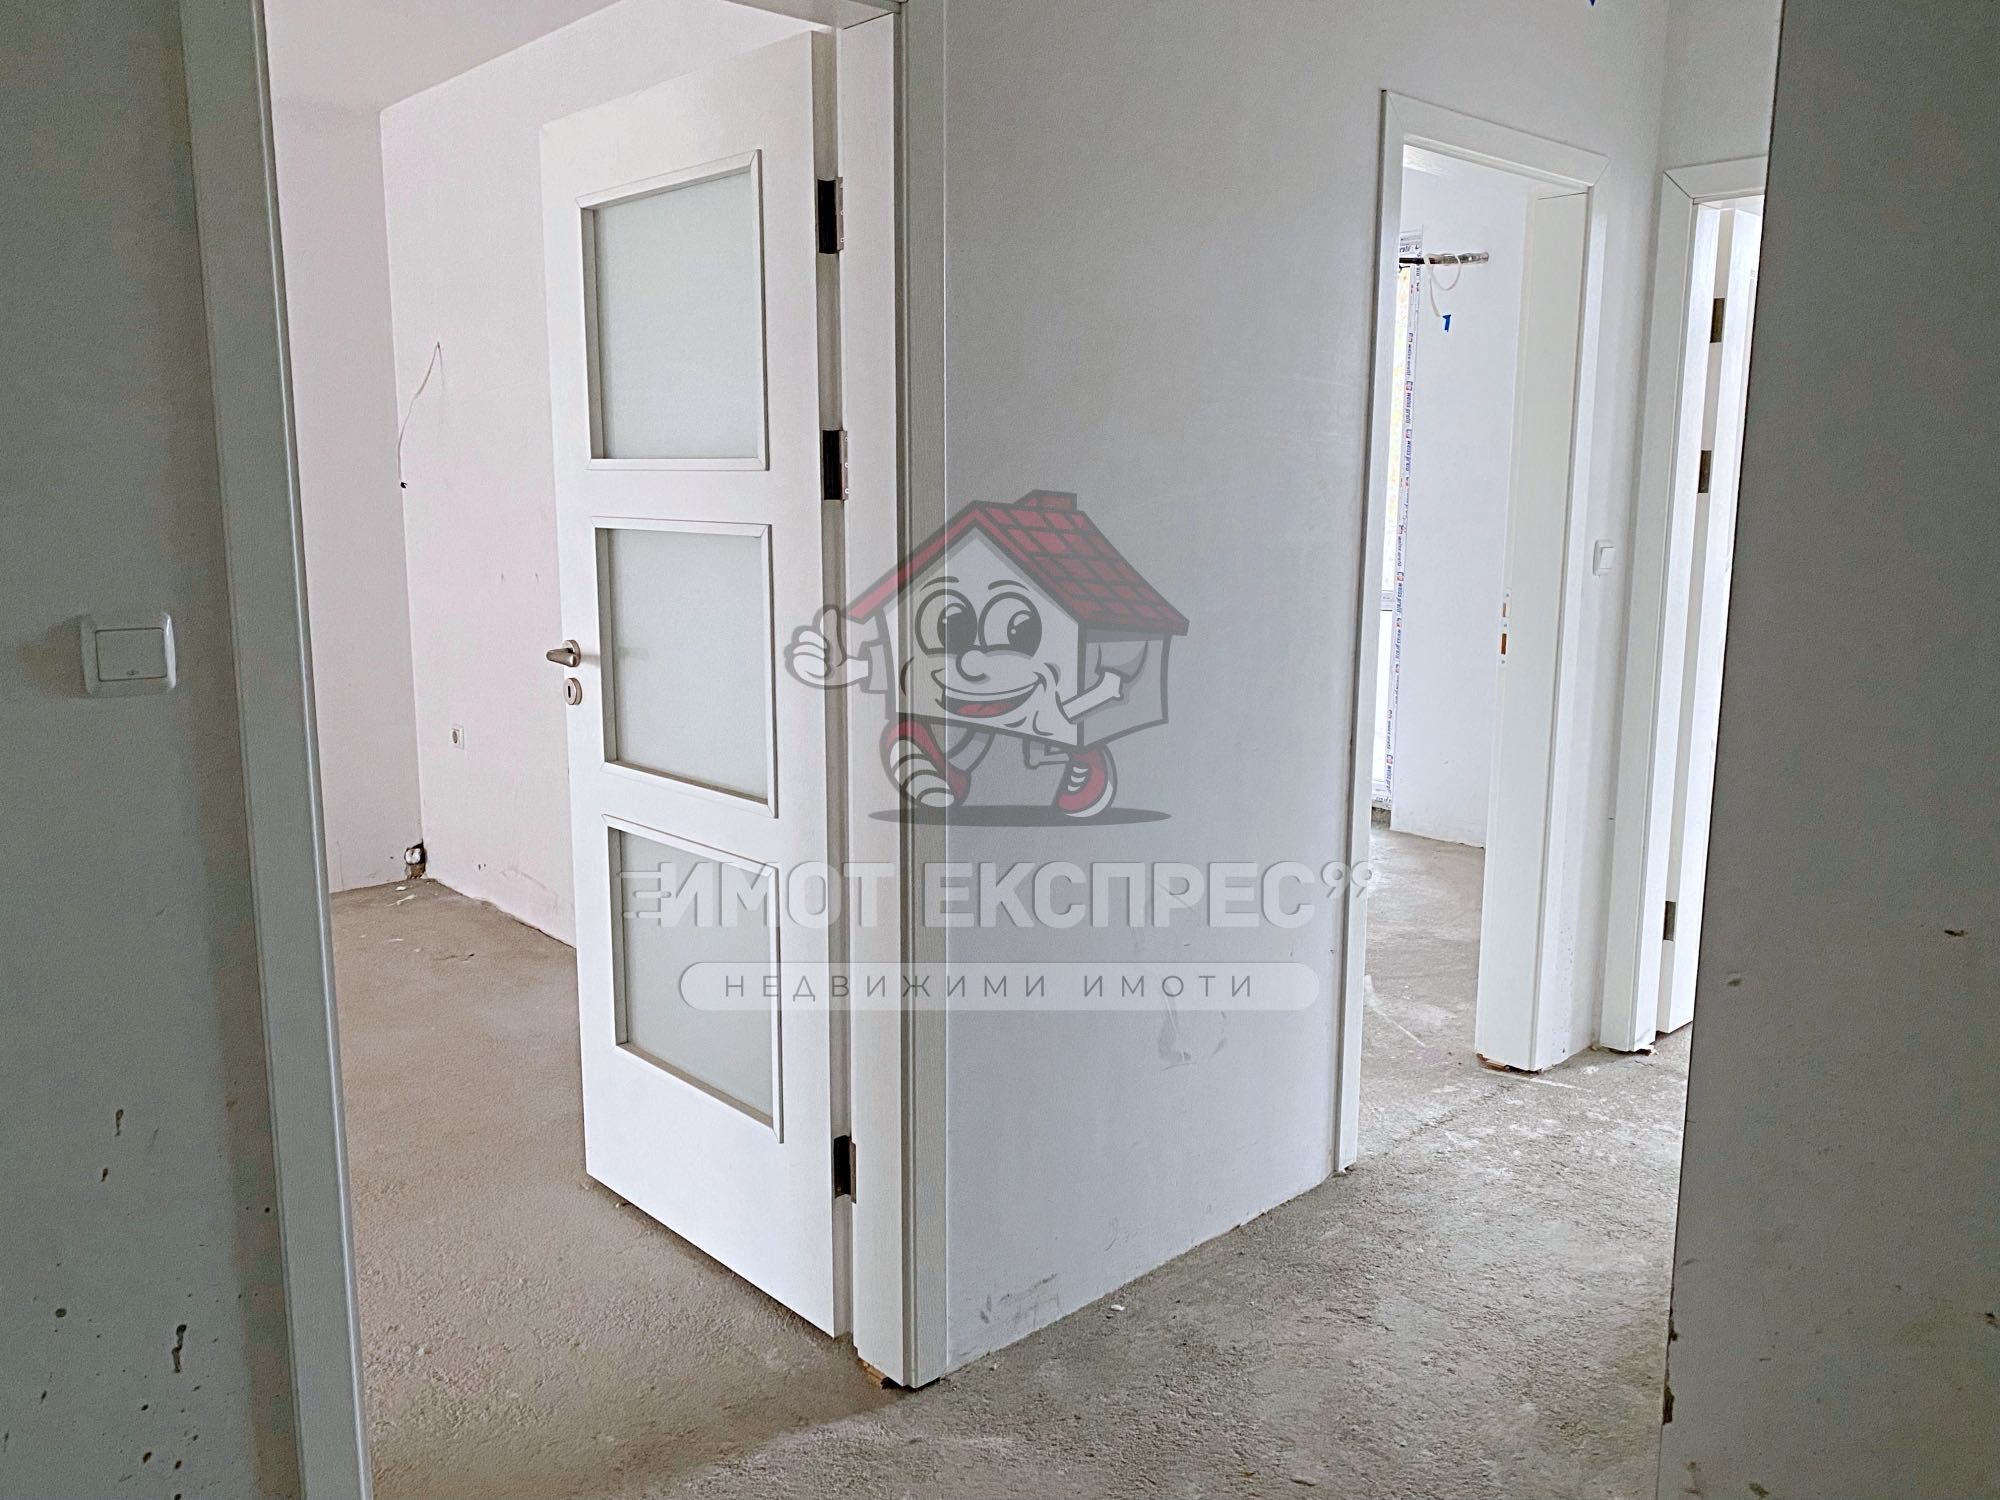 Тристаен апартамент, ново строителство, Акт 16, до Мол Пловдив